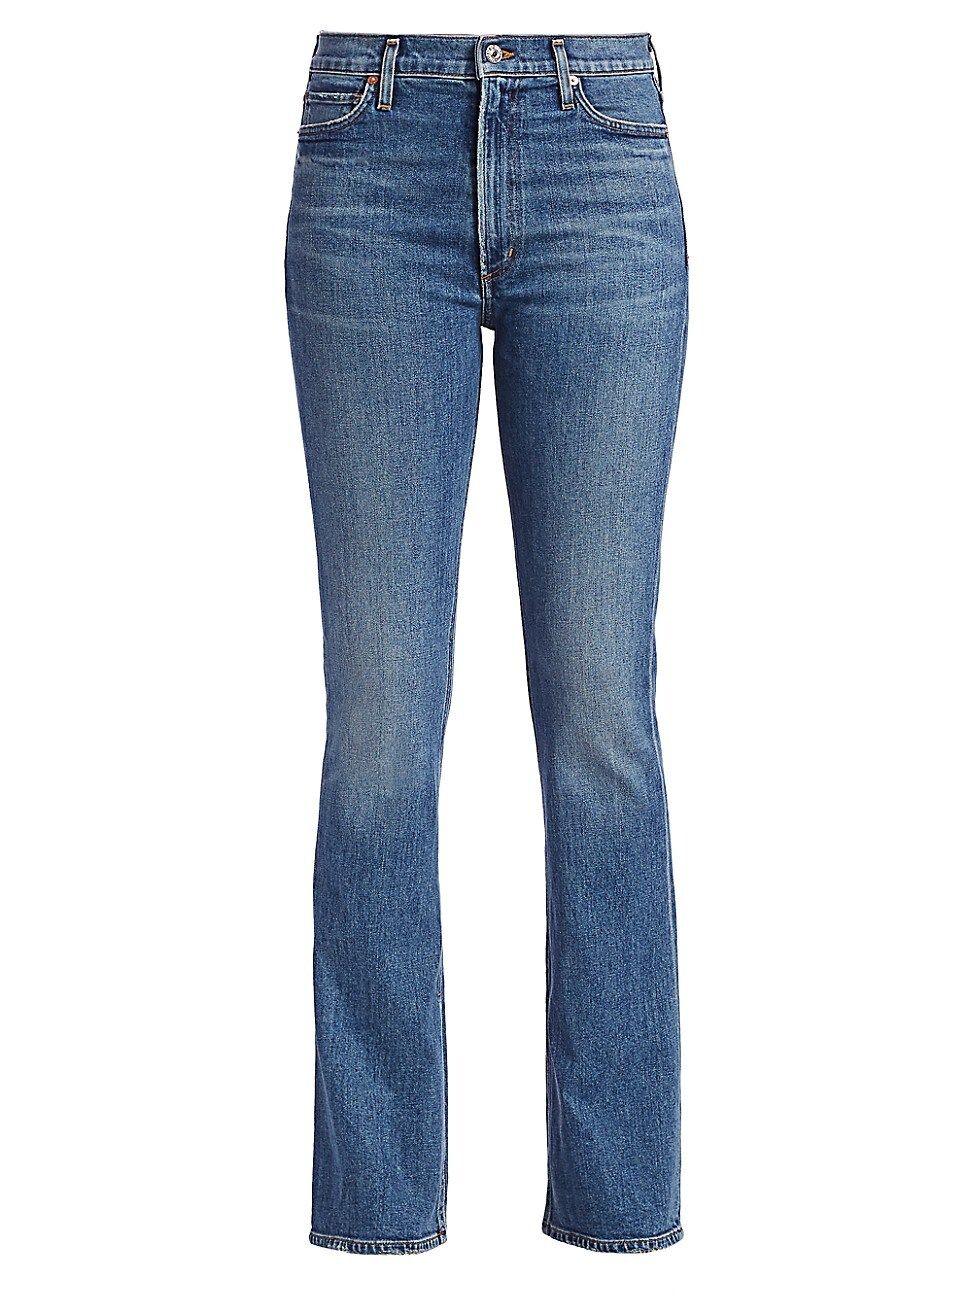 Citizens of Humanity Women's Georgia High-Rise Bootcut Jeans - Heist Light Vintage Indigo - Size Den | Saks Fifth Avenue